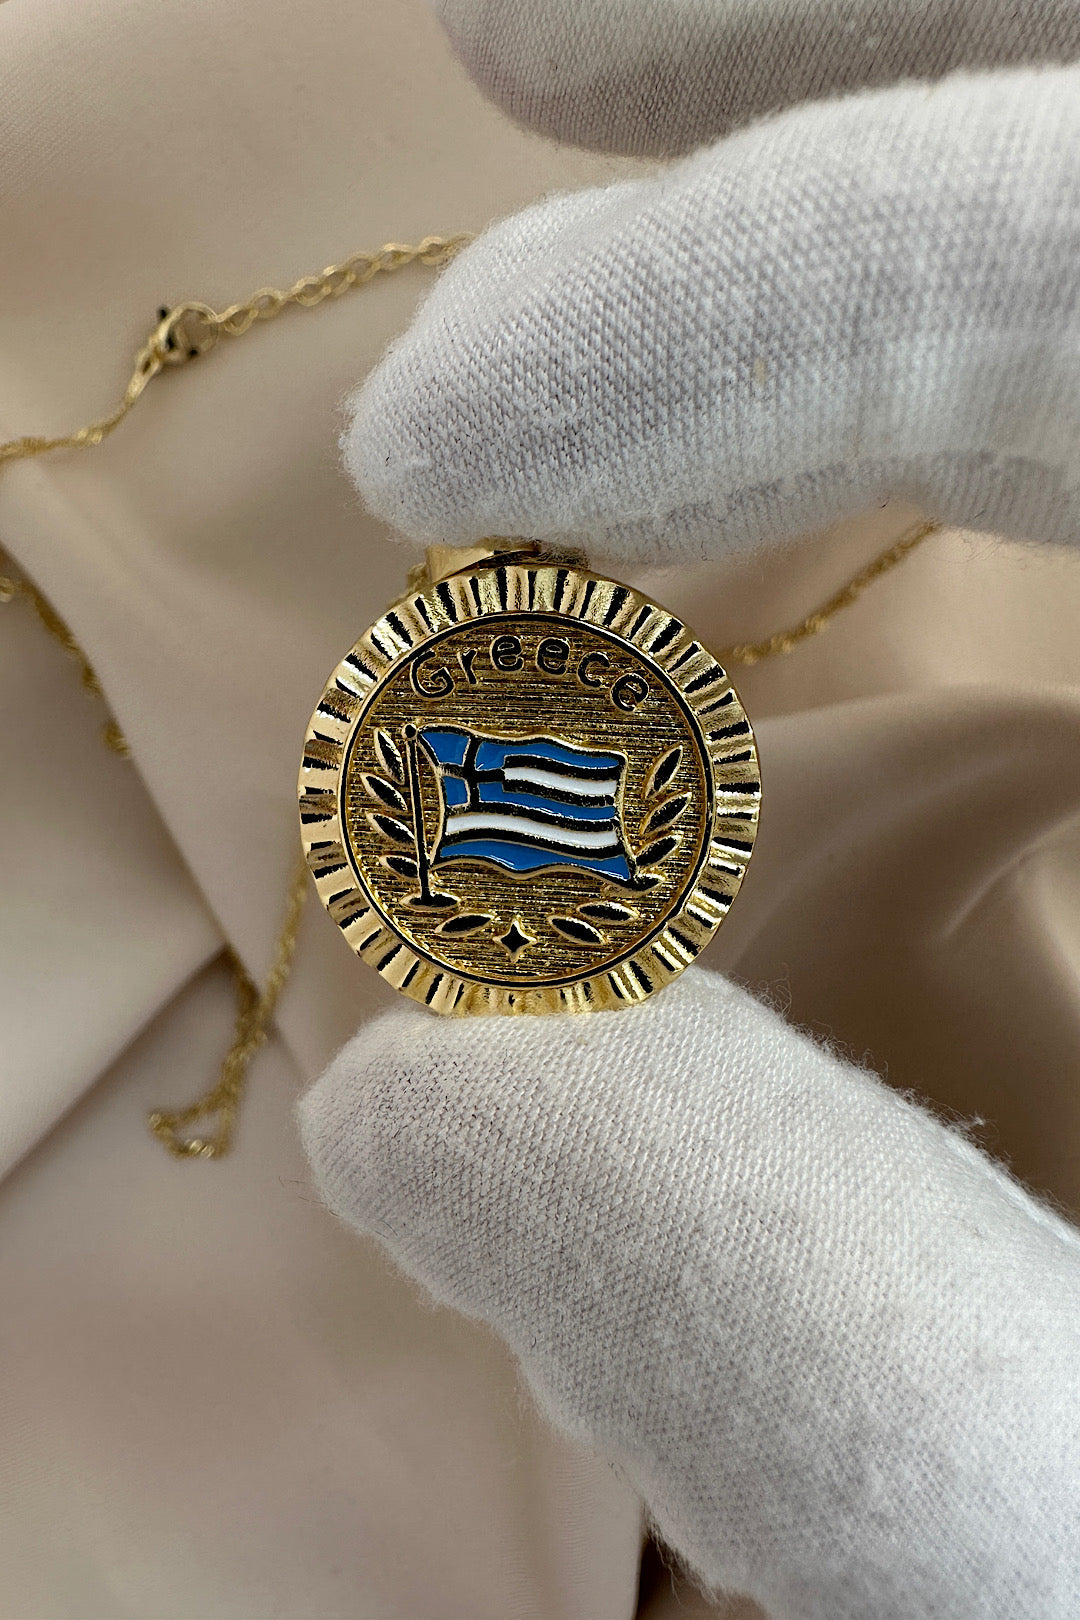 Greece flag Necklace